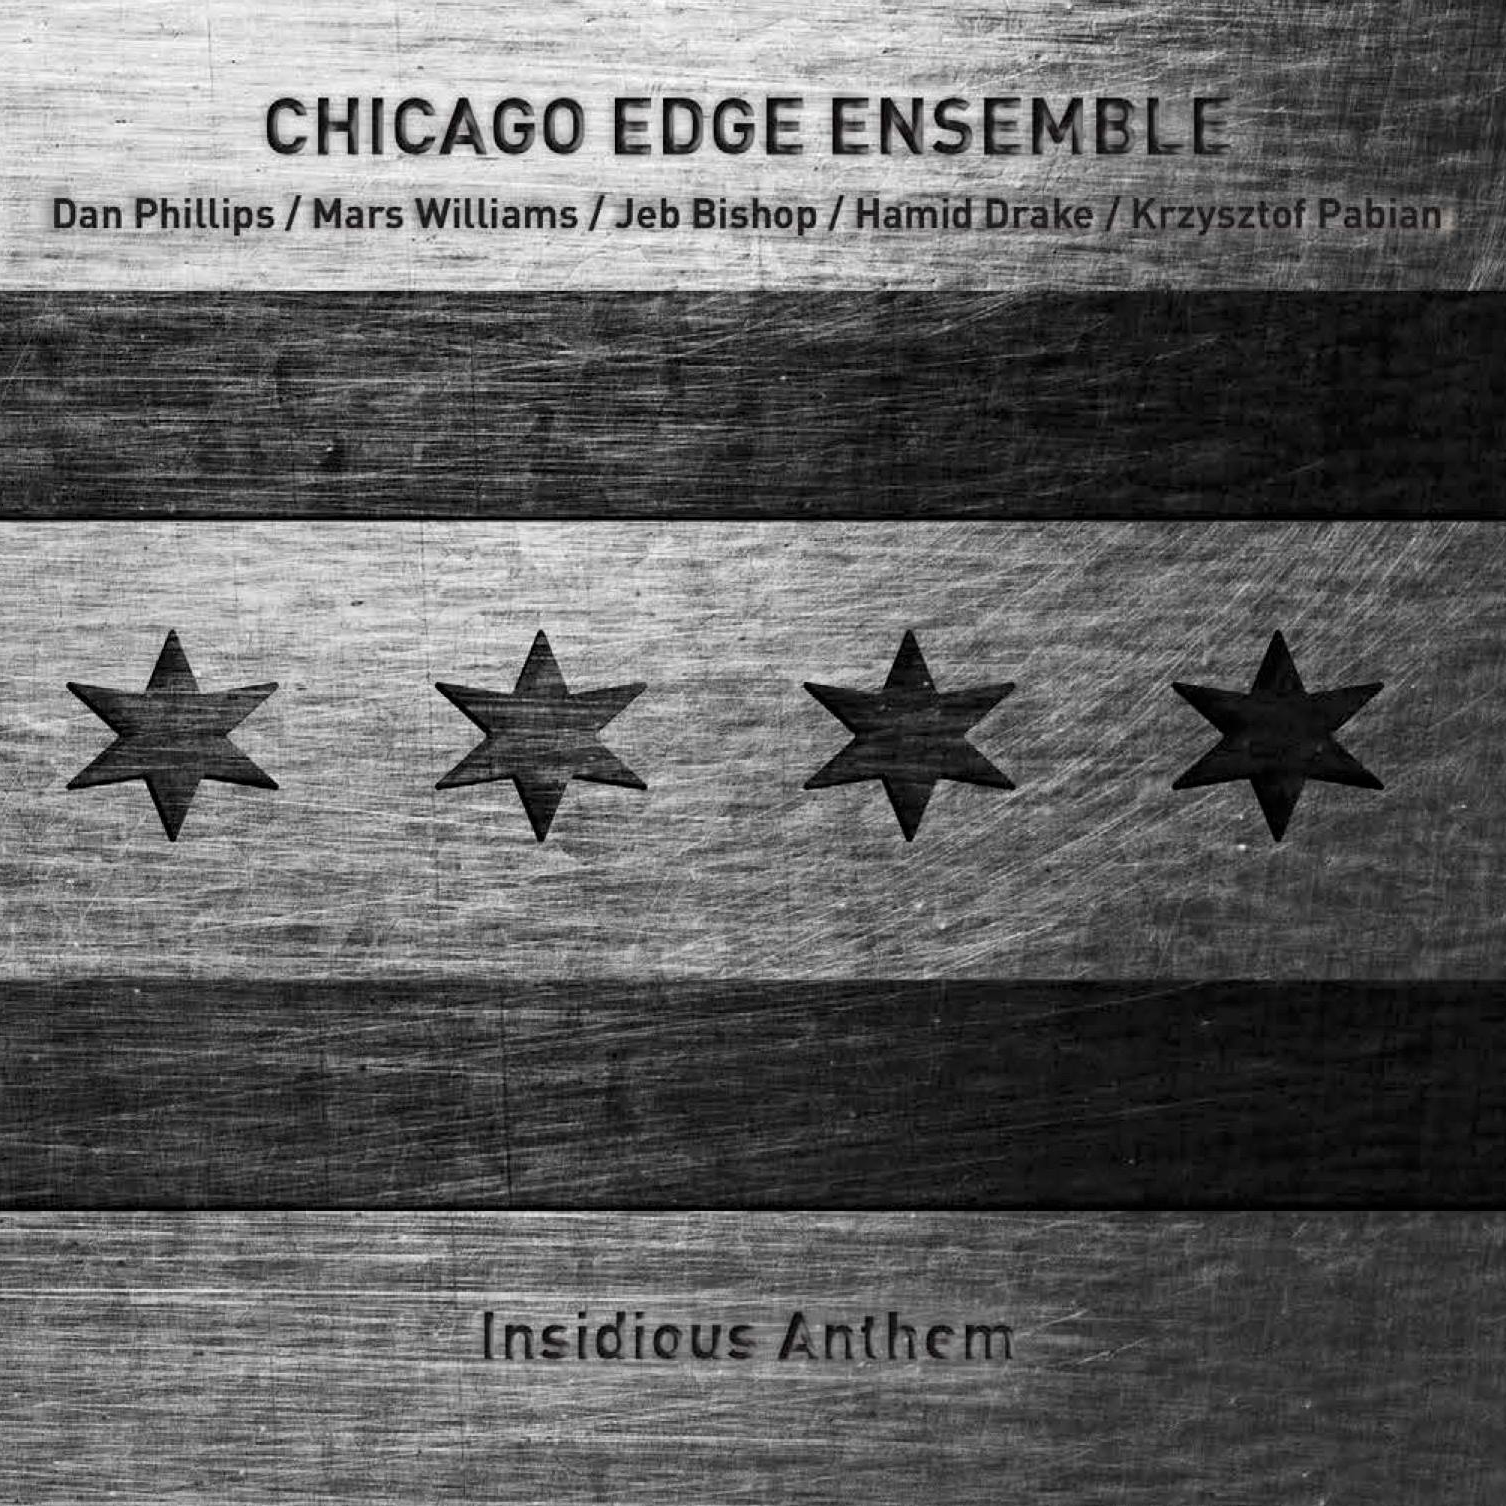 Chicago Edge Ensemble "Insidious Anthem"